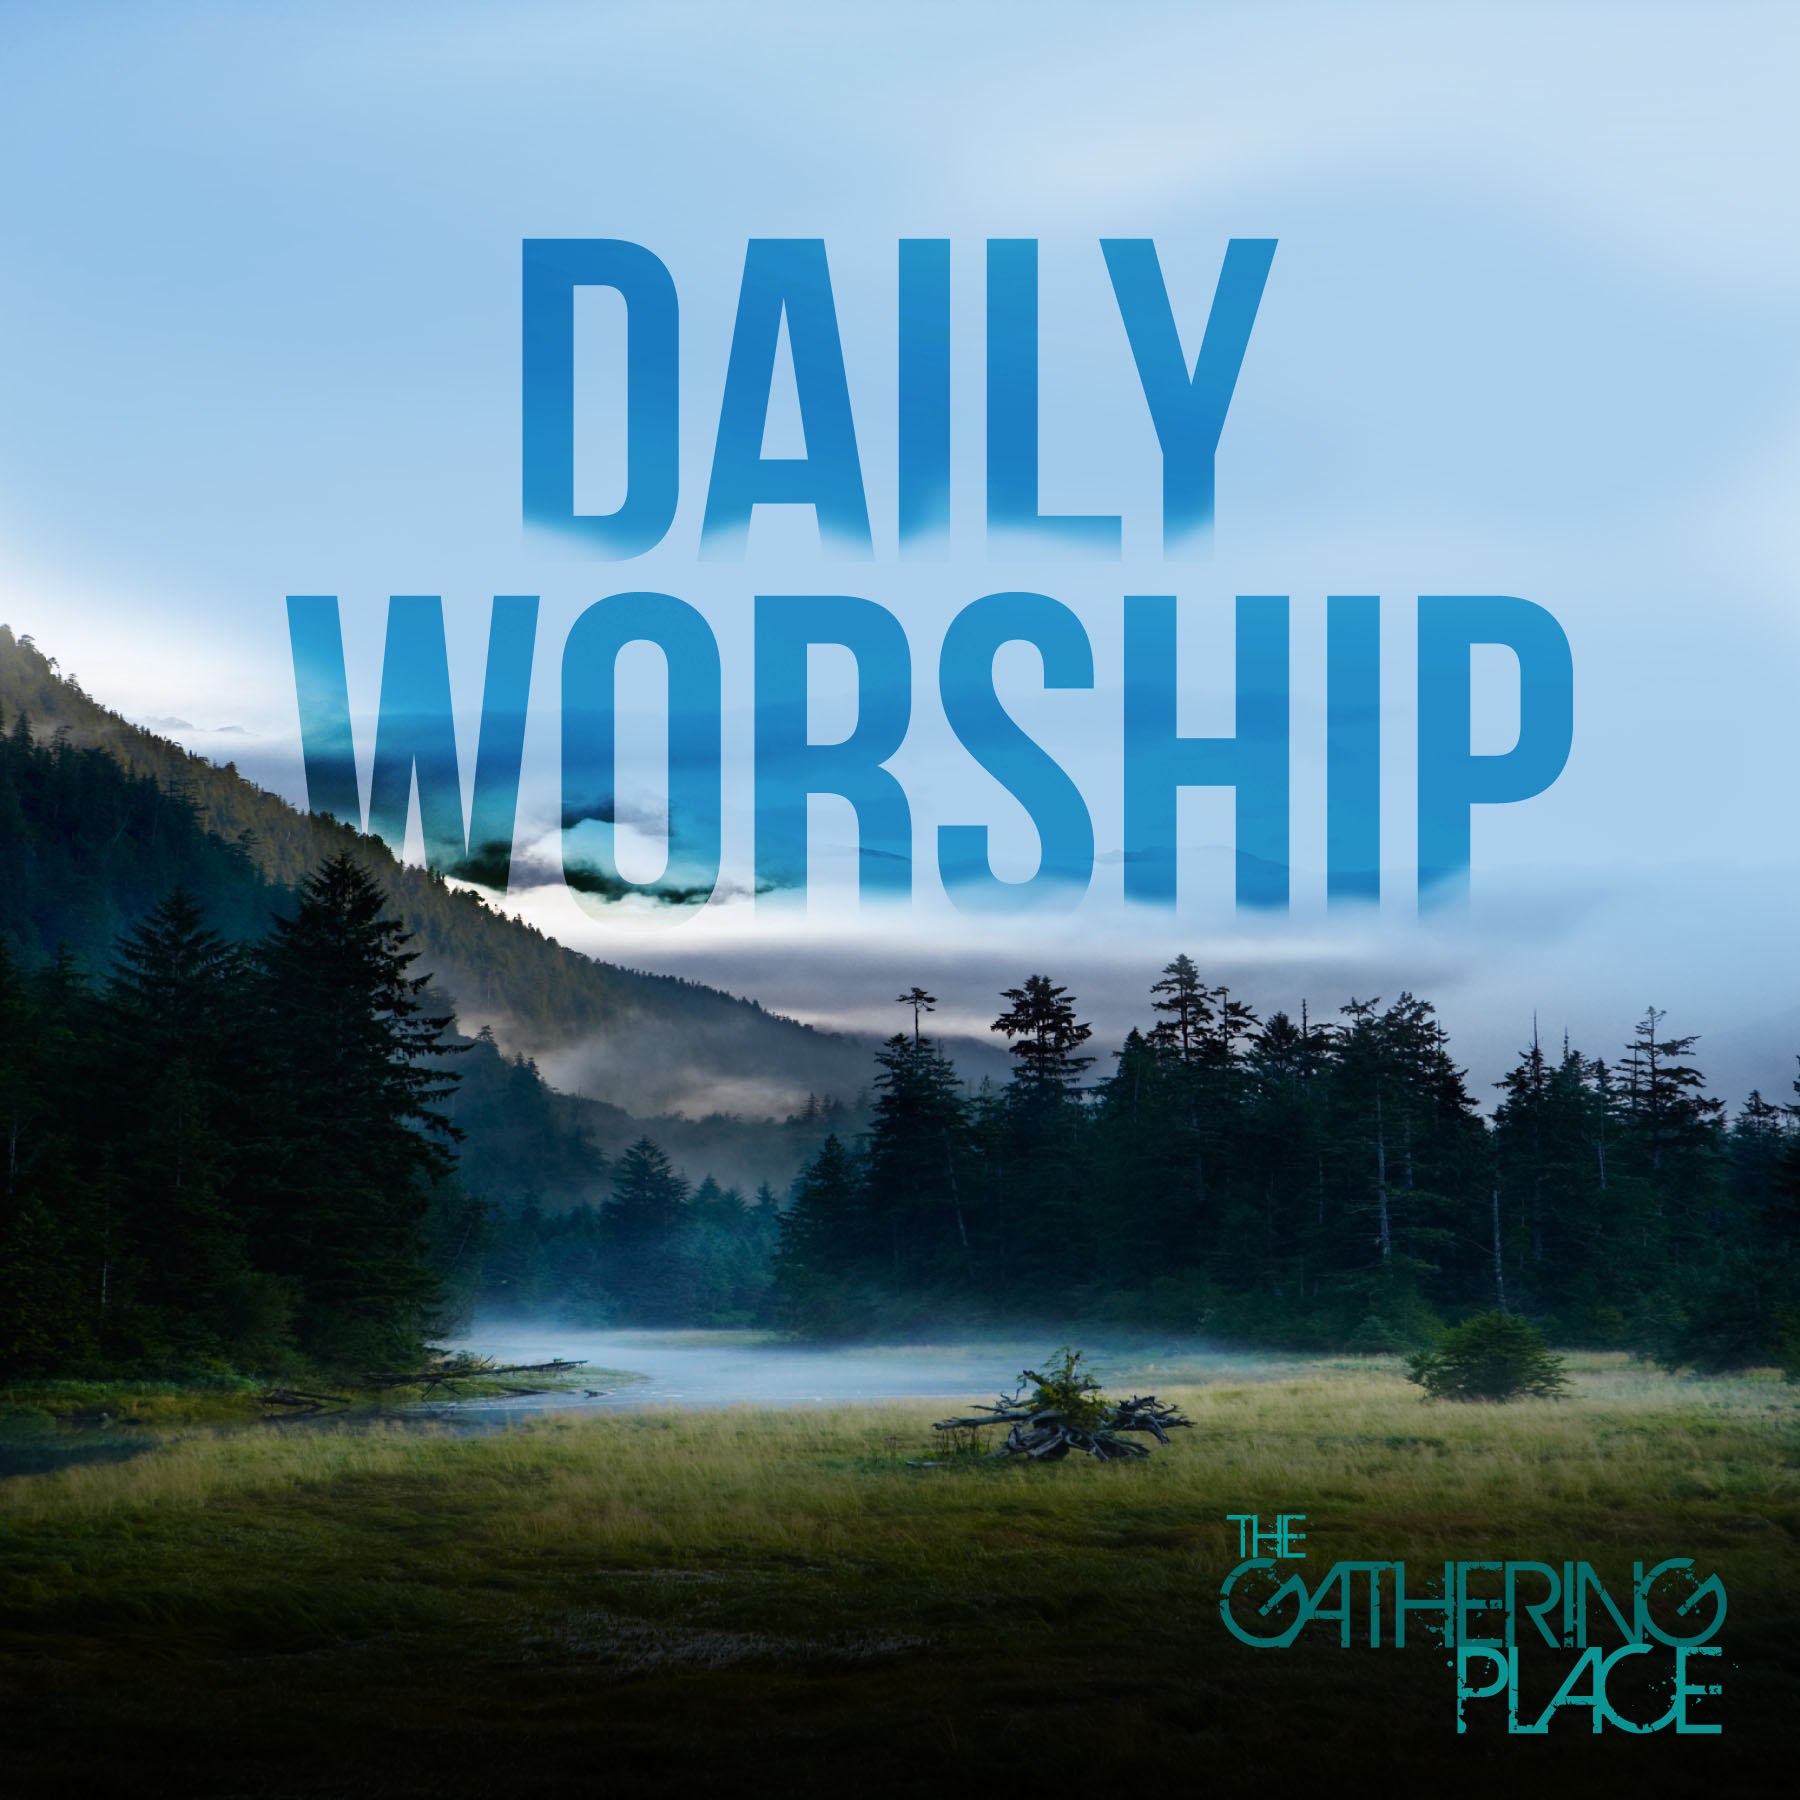 9-18-12 Daily Worship